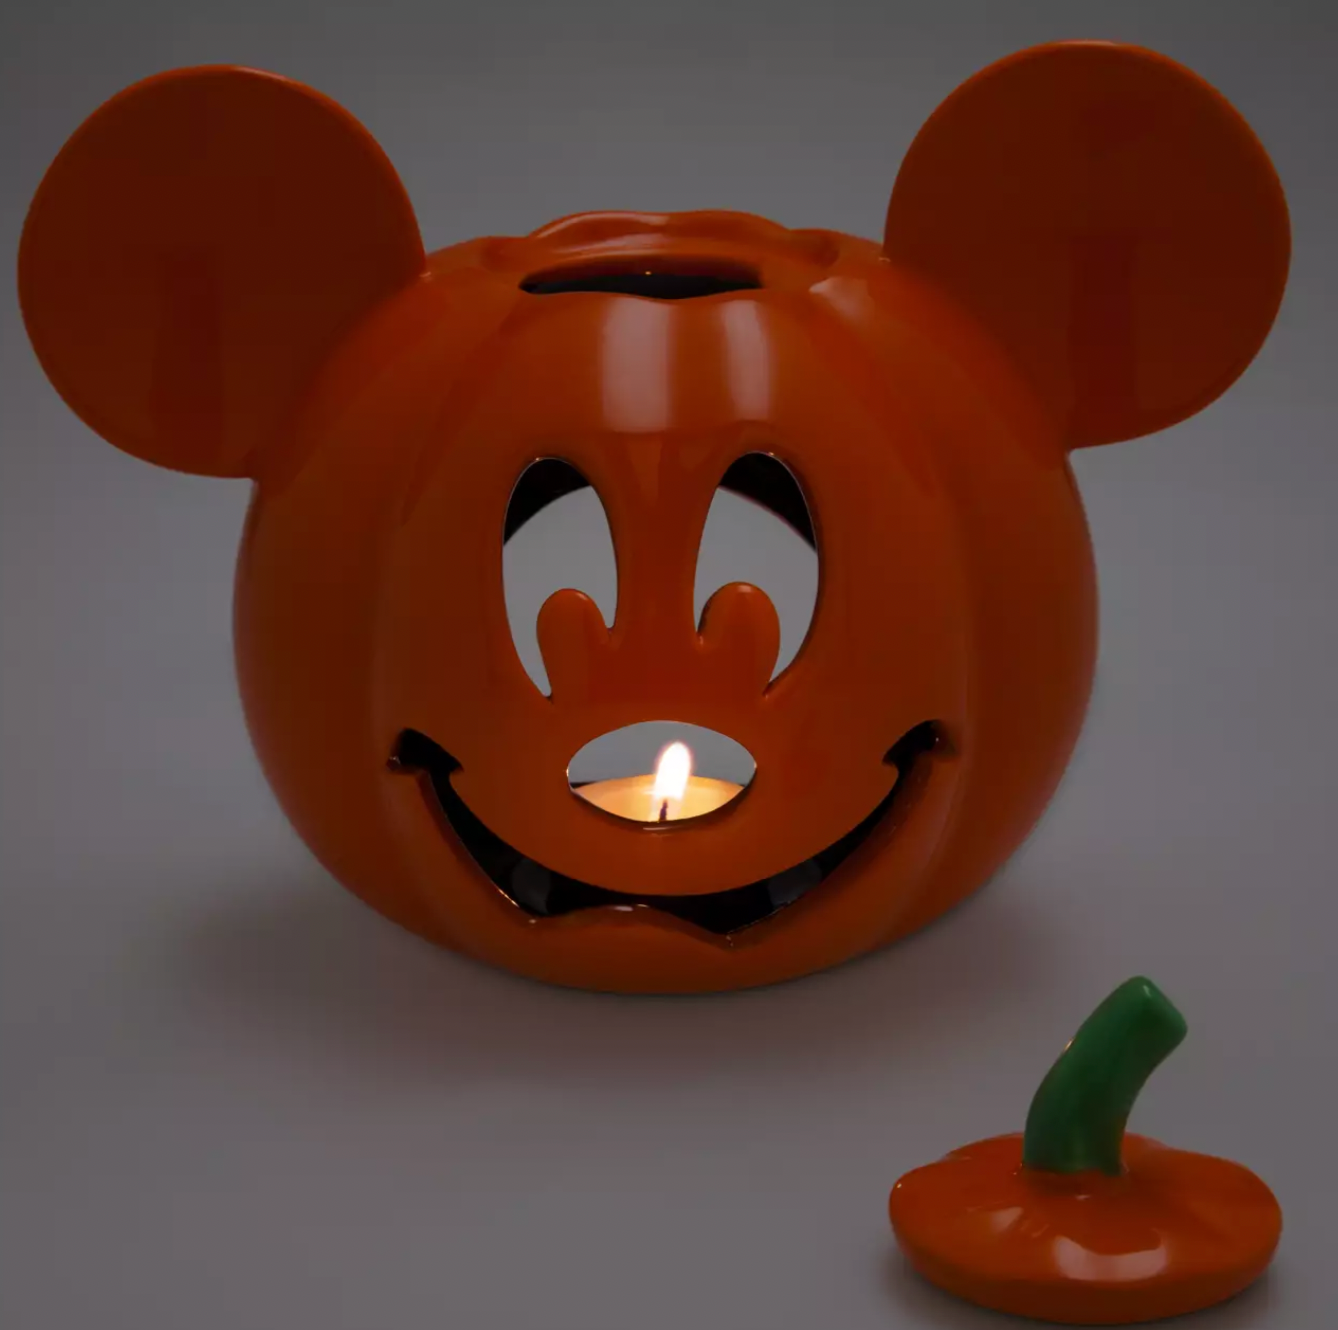 Disney Halloween Mickey Jack-o'-Lantern Gloss Finish Votive Candle Holder New